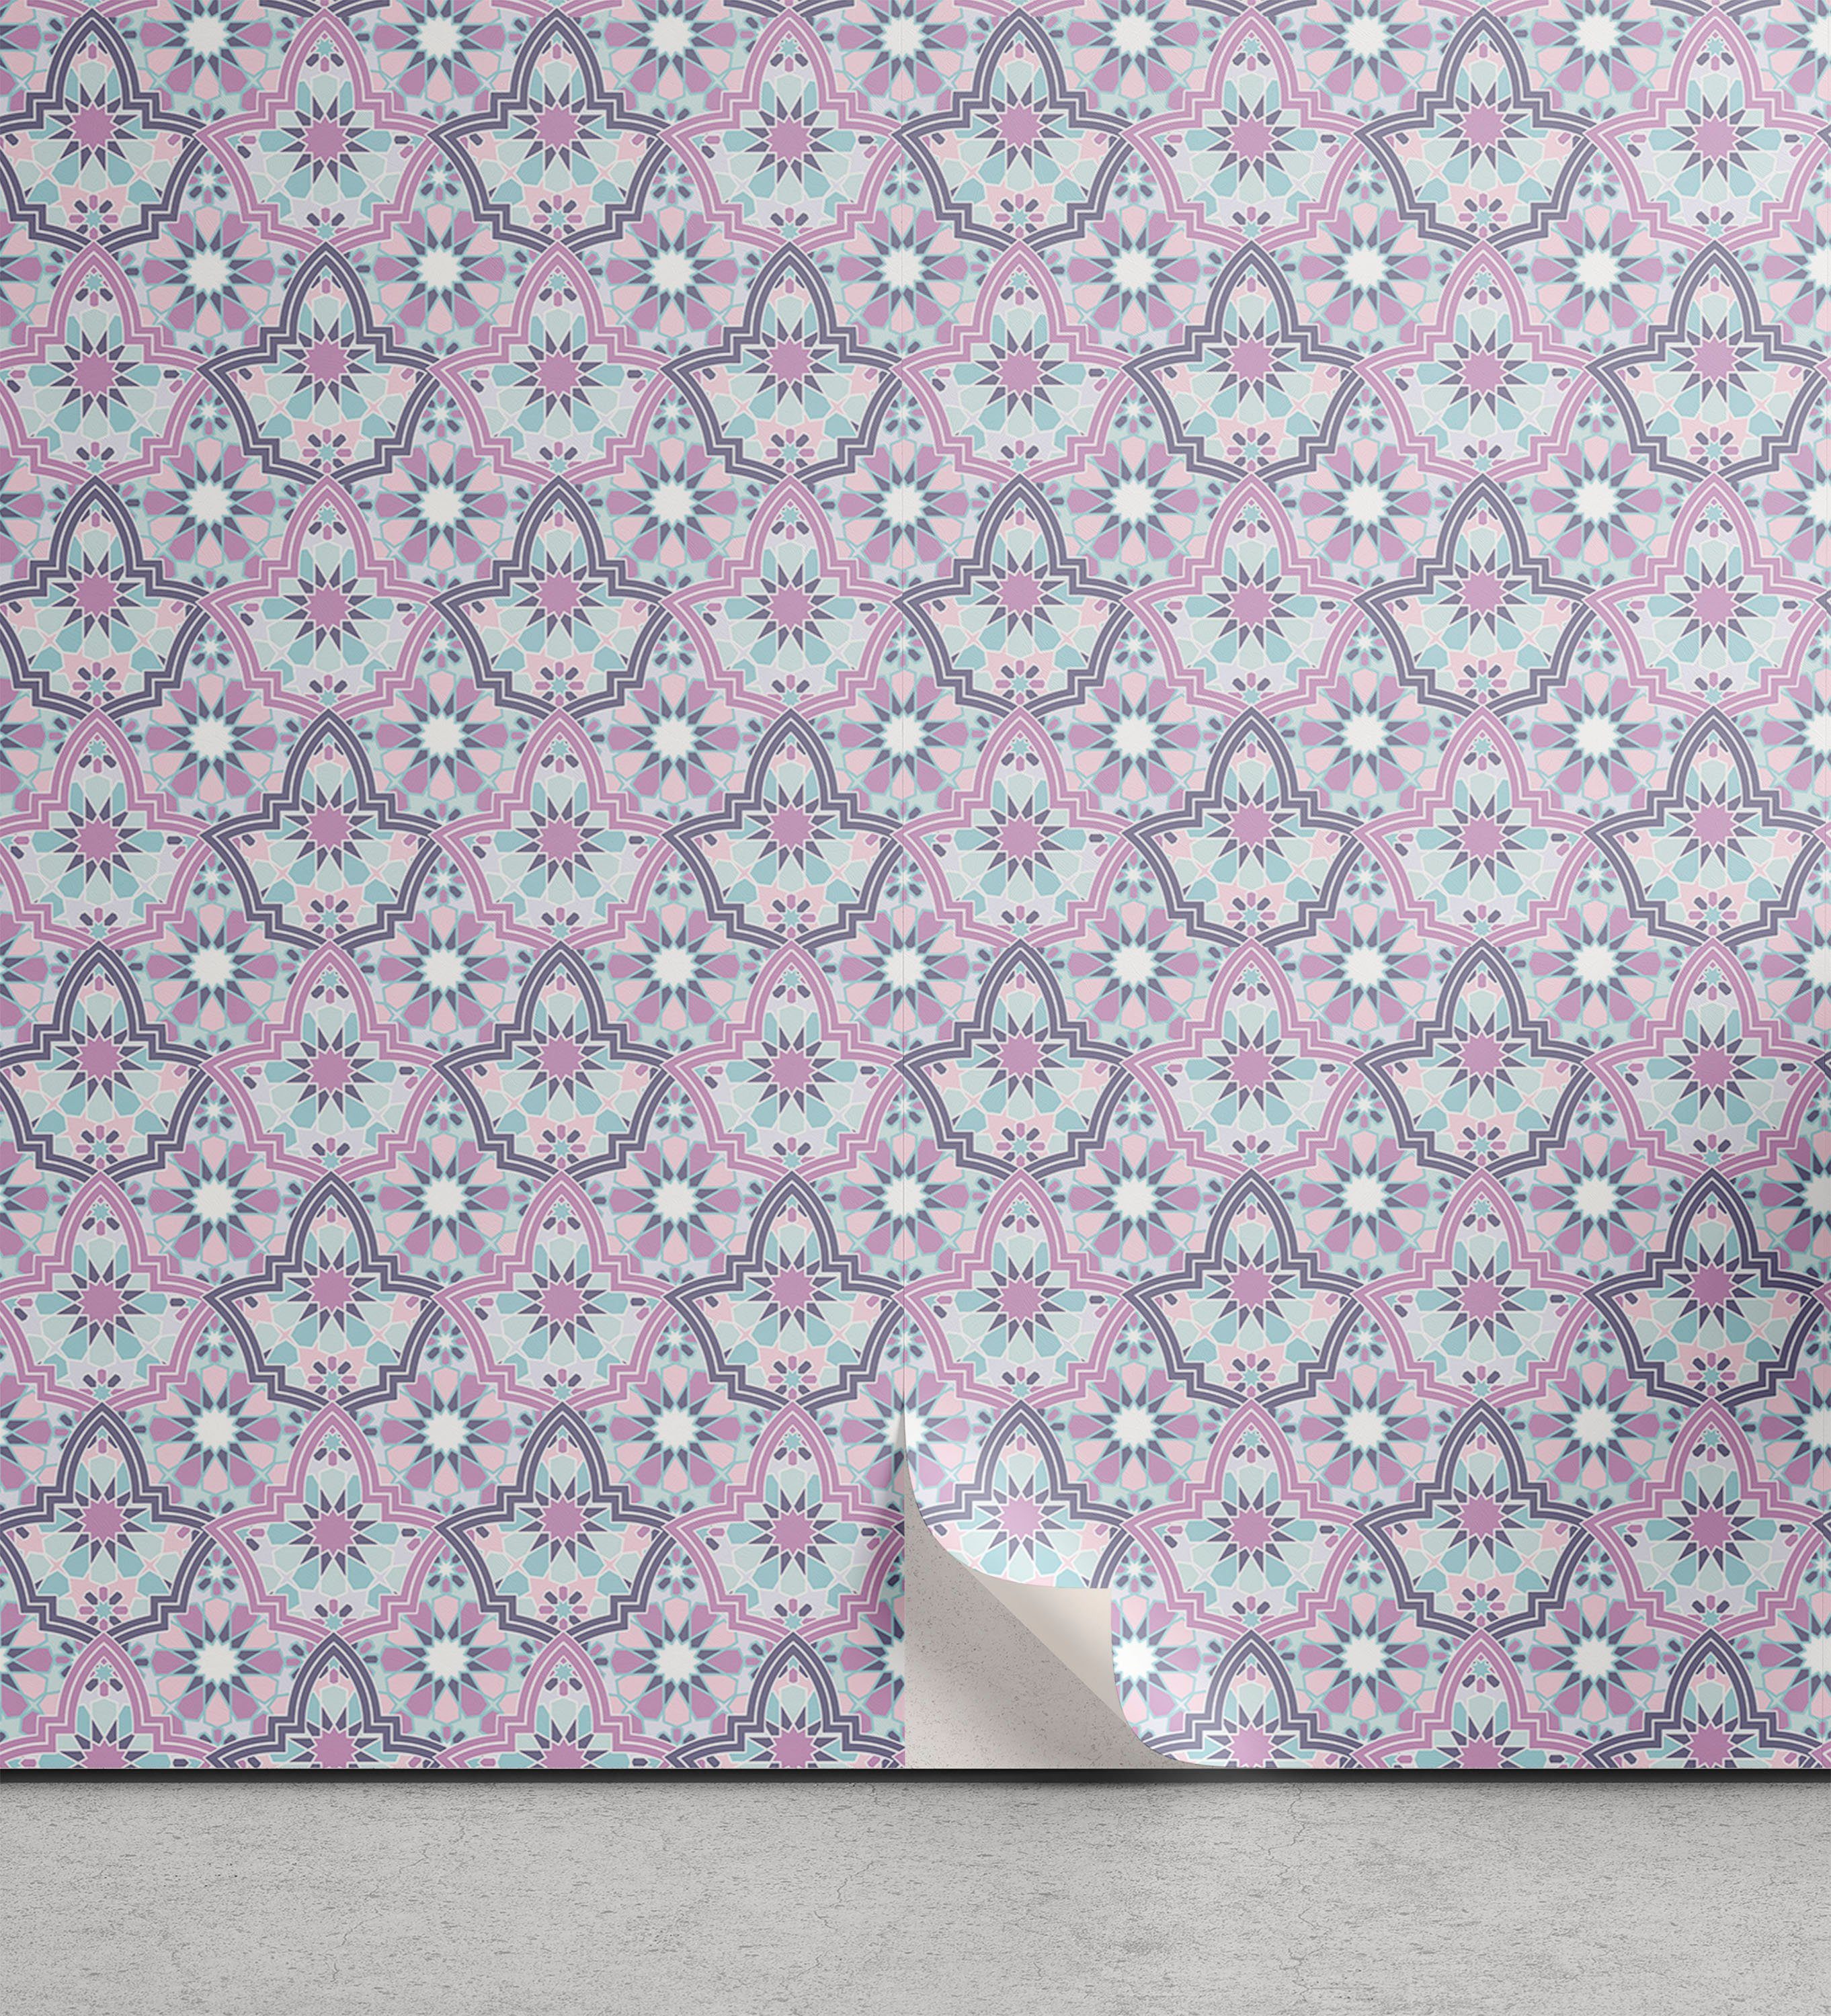 Abakuhaus Vinyltapete selbstklebendes Wohnzimmer Küchenakzent, marokkanisch Pastelltöne Blumenmotiv